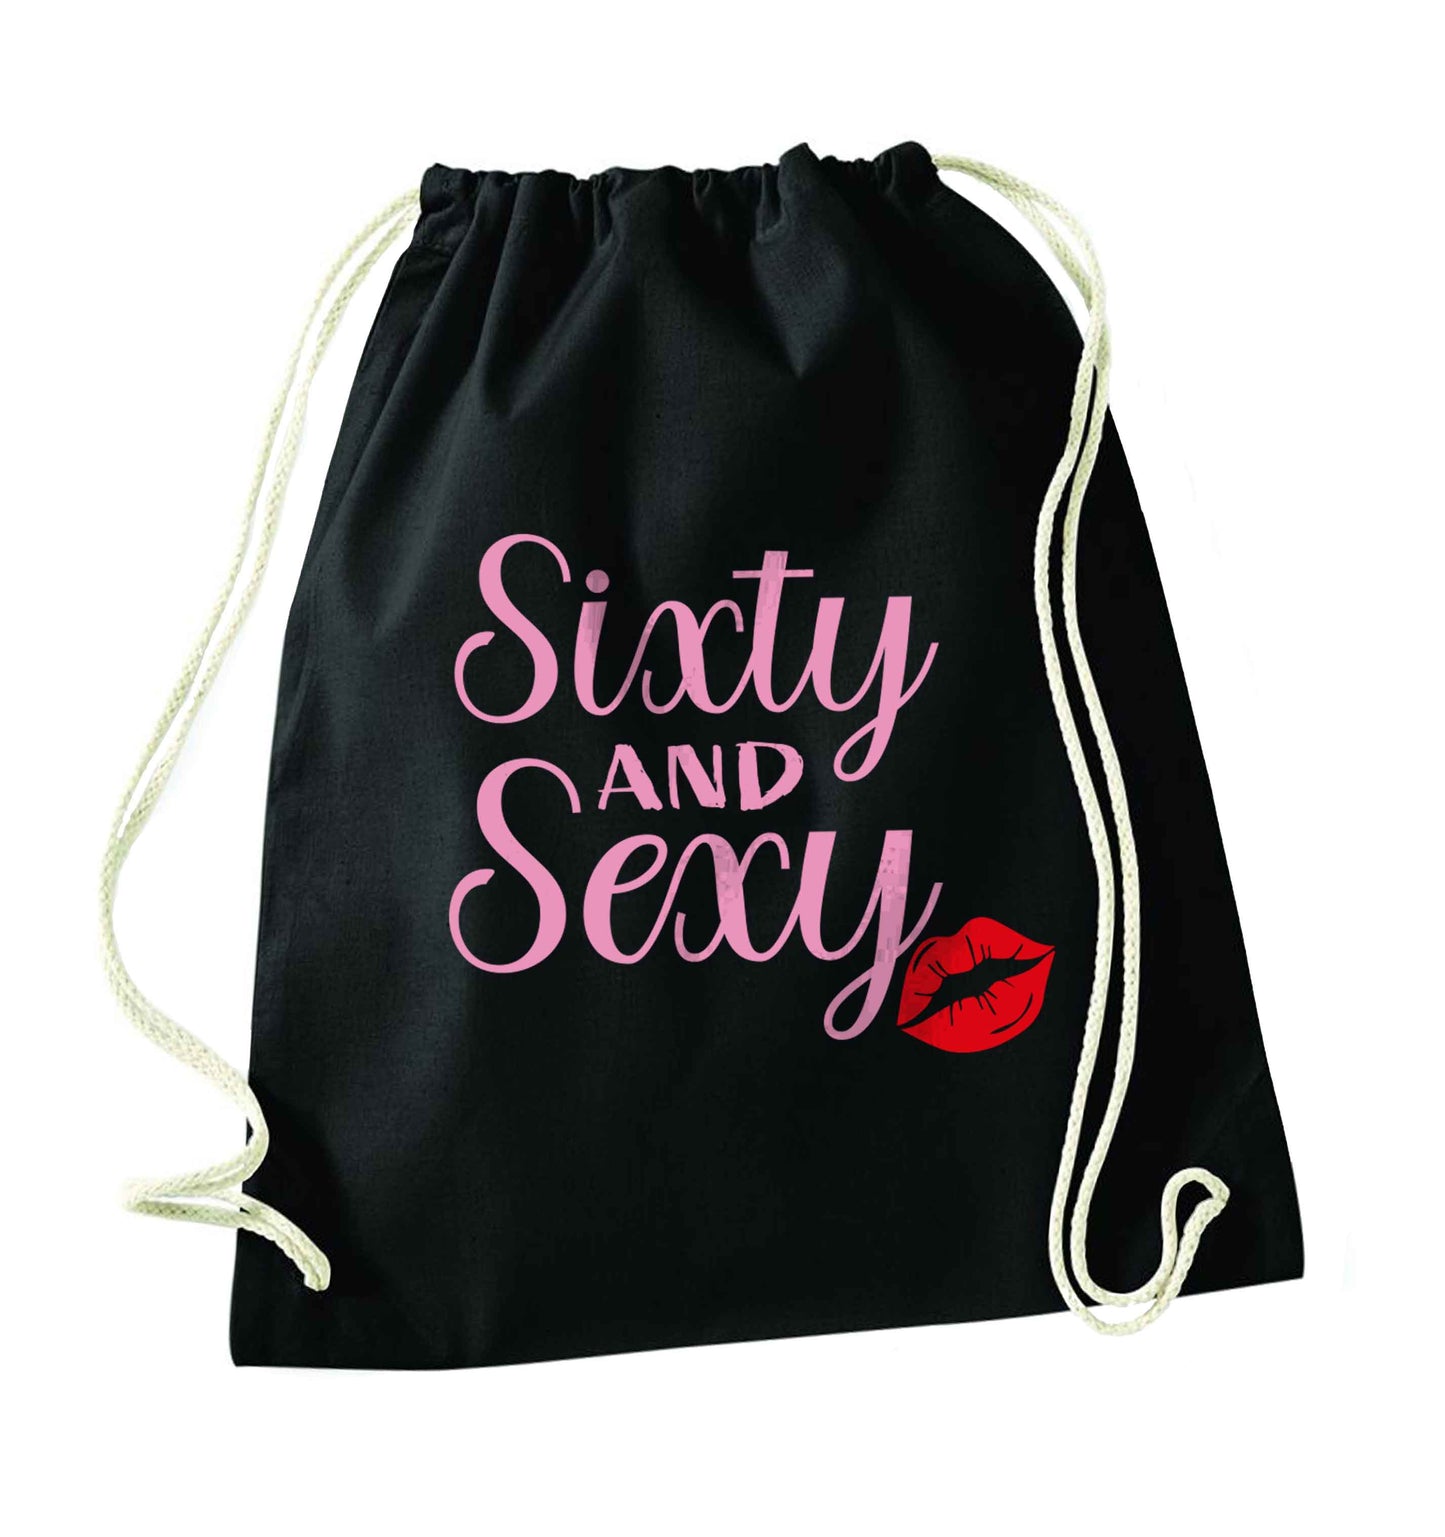 Sixty and sexy black drawstring bag